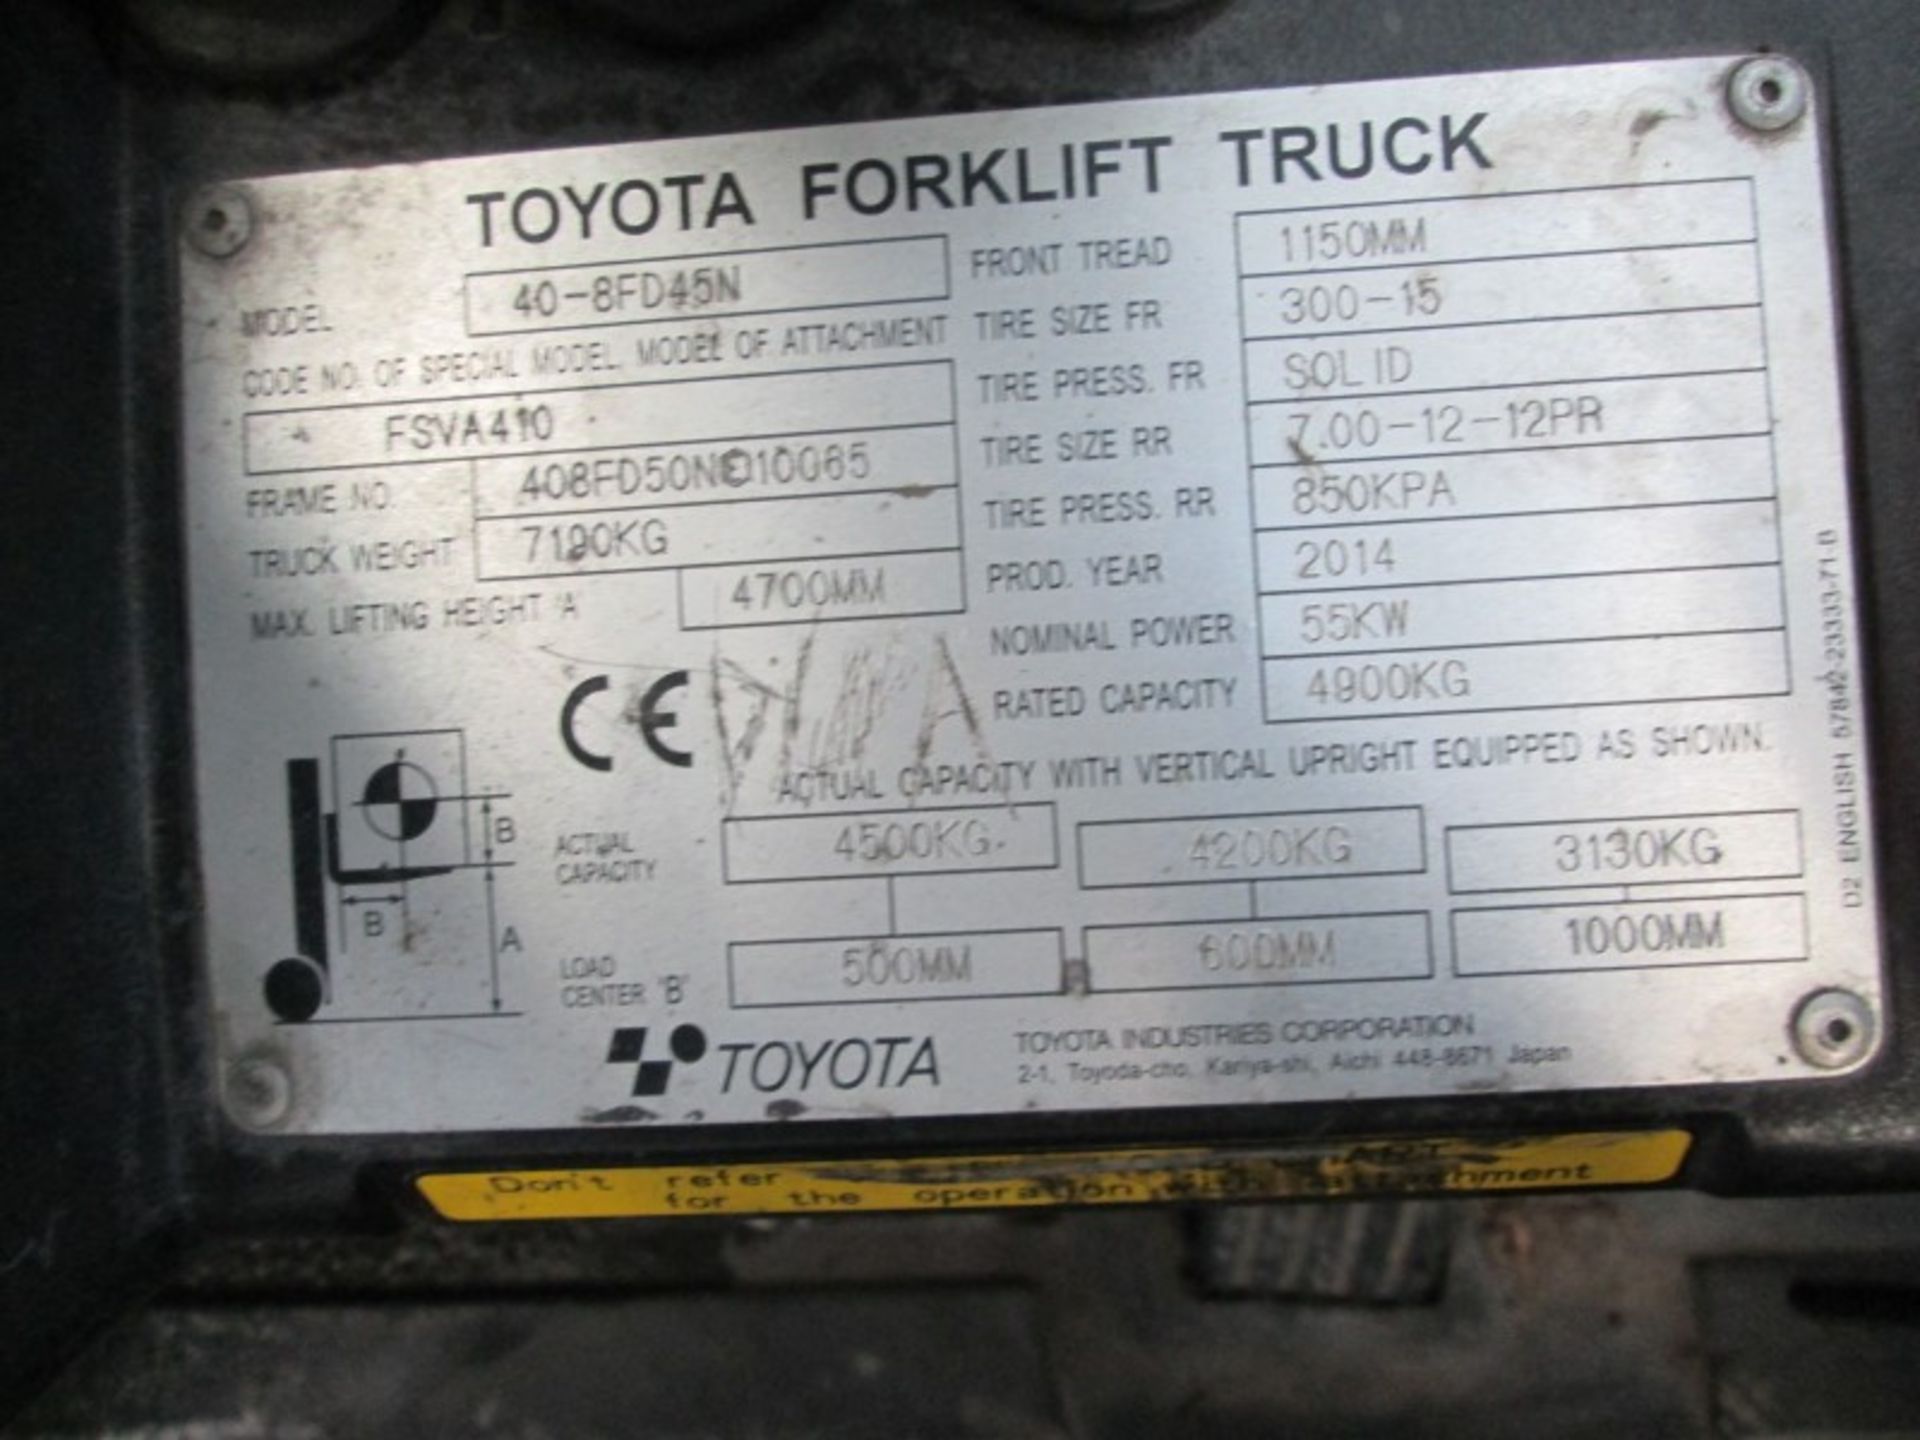 TOYOTA 40-8FD45N Plant Diesel - VIN: 408FD50NE10065 - Year: 2014 - 210 Hours - Triplex 4.7M - Image 9 of 9